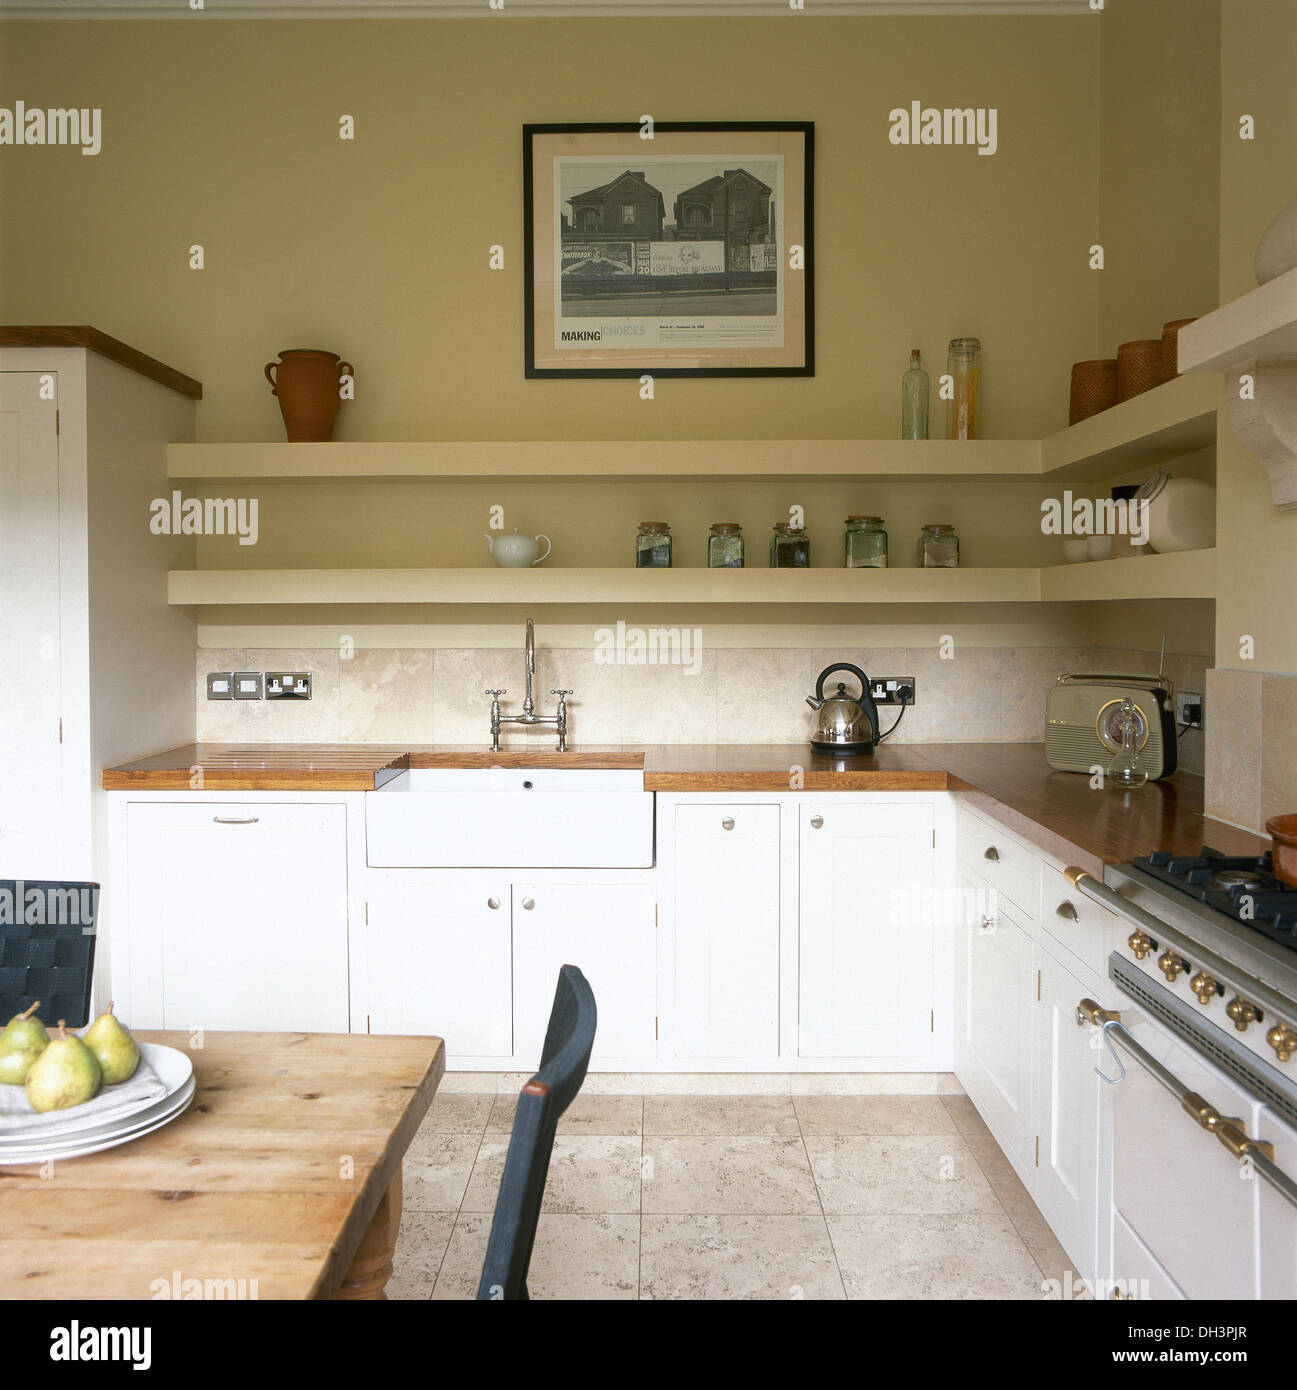 Shelf Over Sink In Kitchen by Stocksy Contributor Sergey